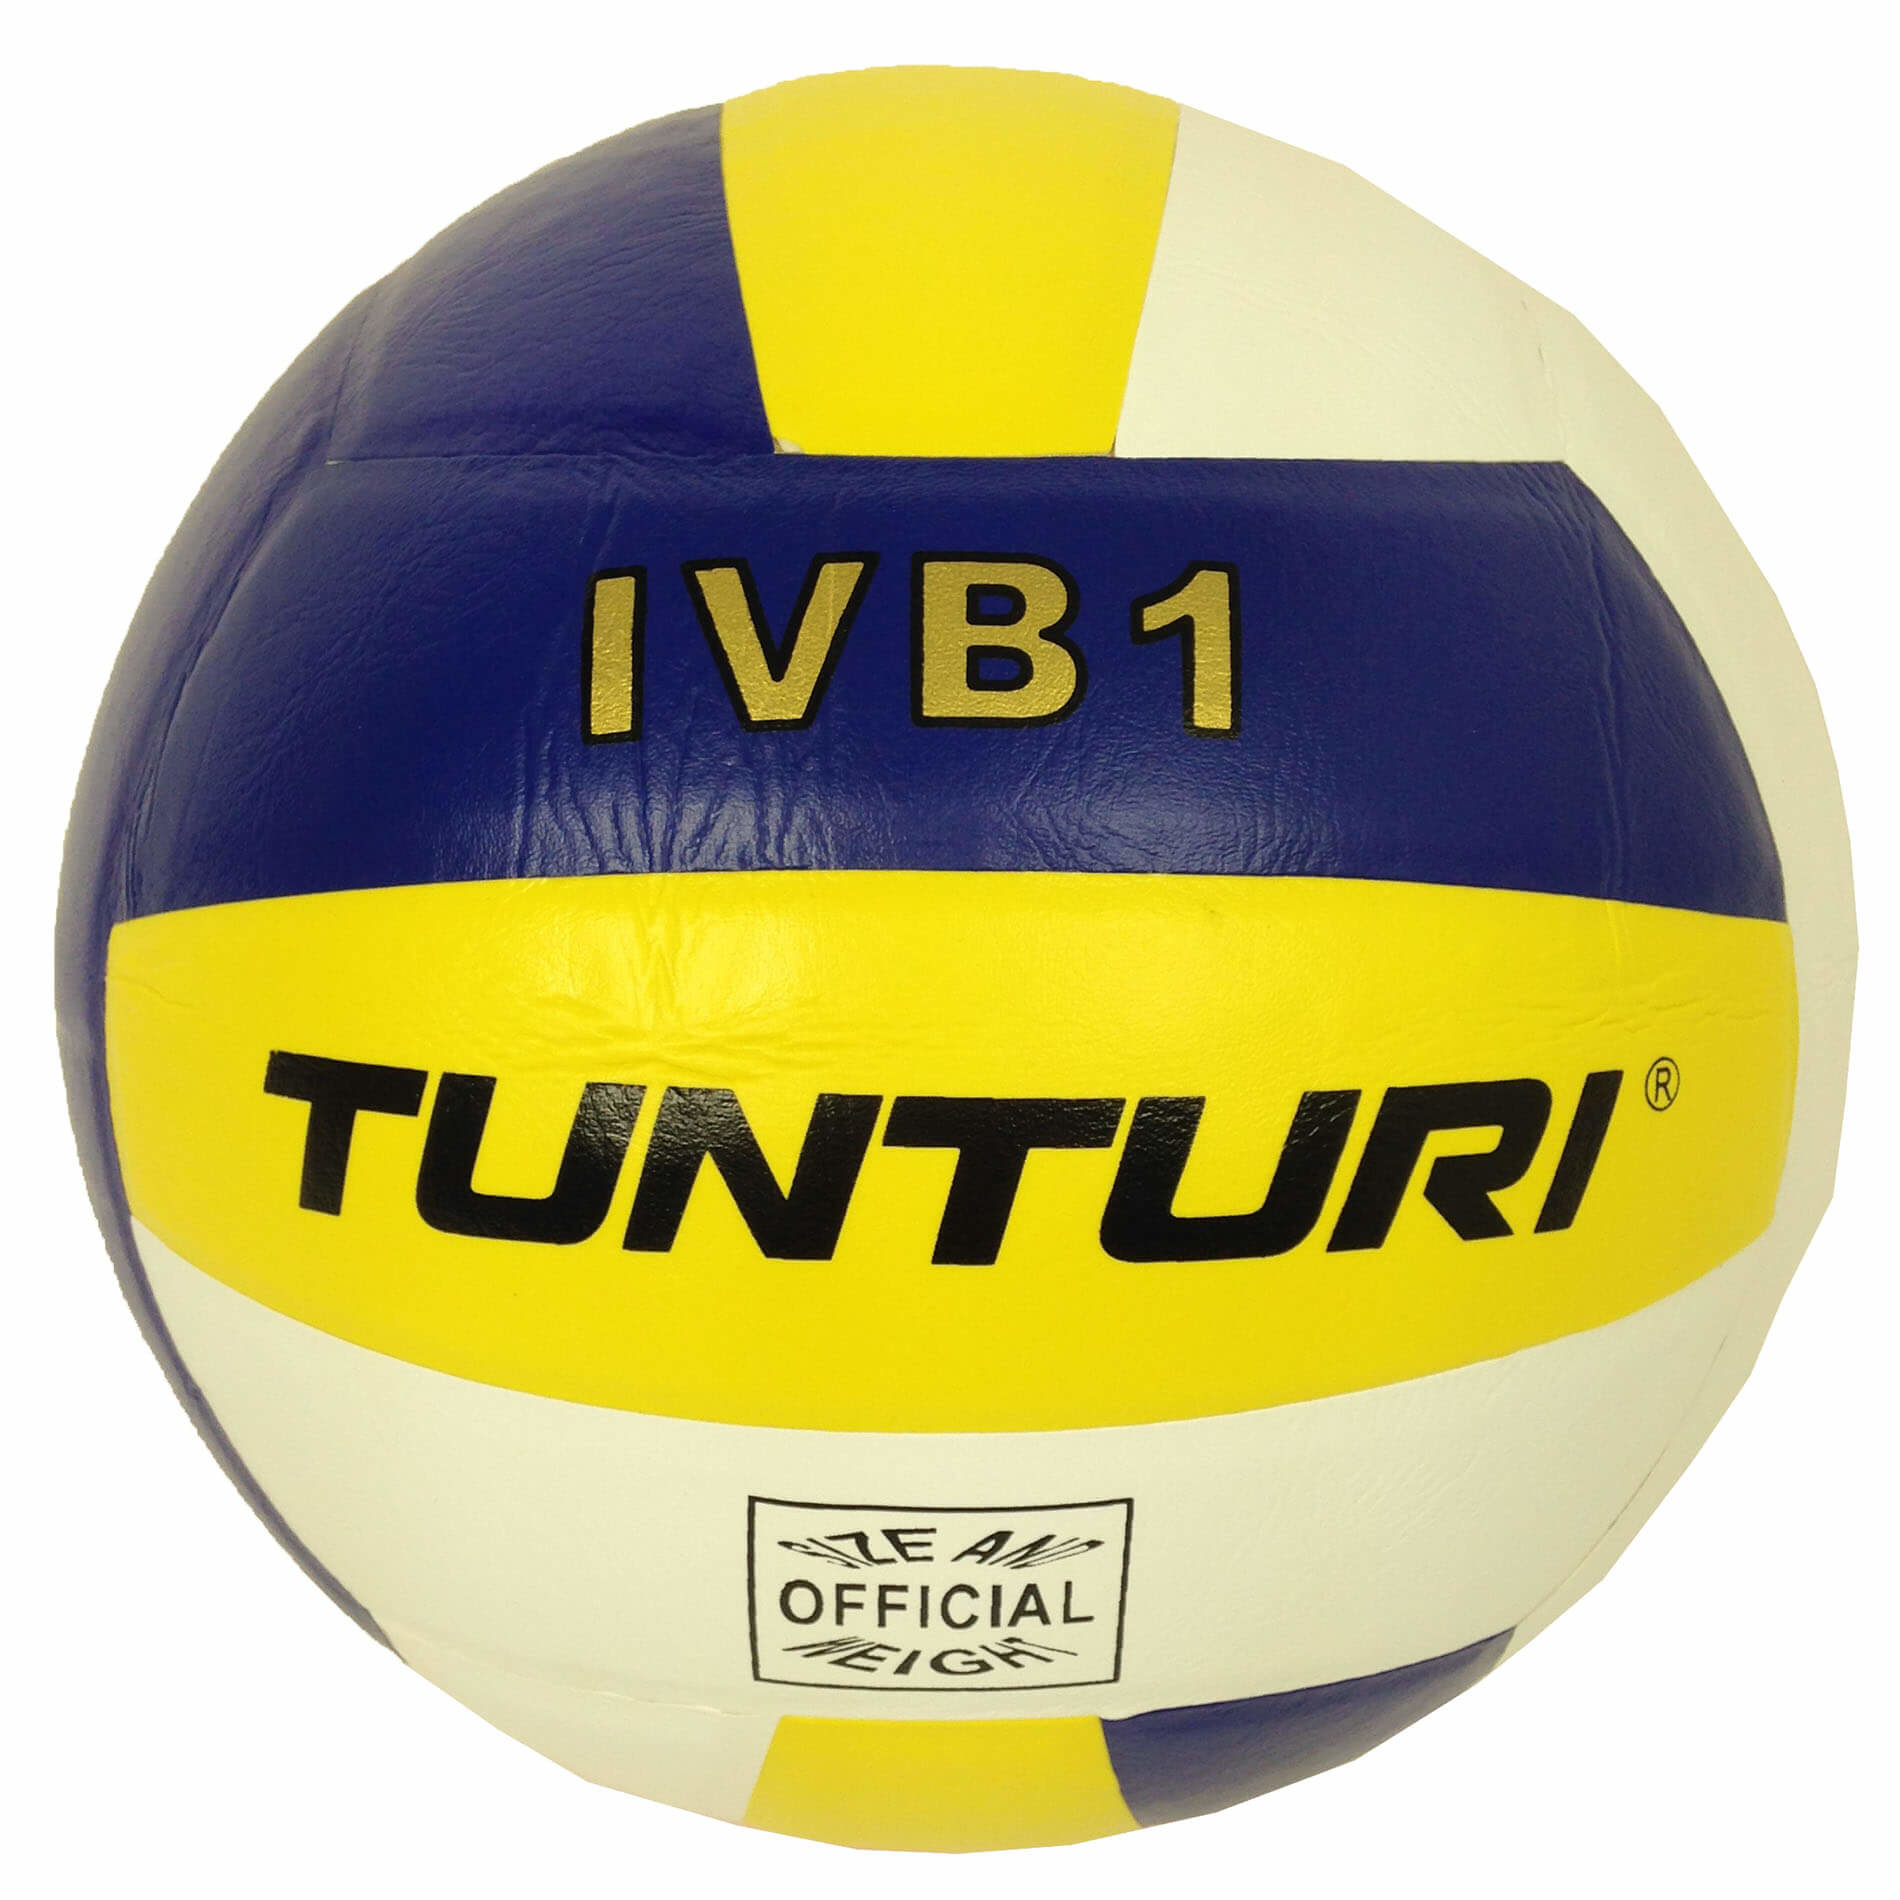 offset Gemengd Op maat Volleybal bal - IVB1 - Tunturi Fitness